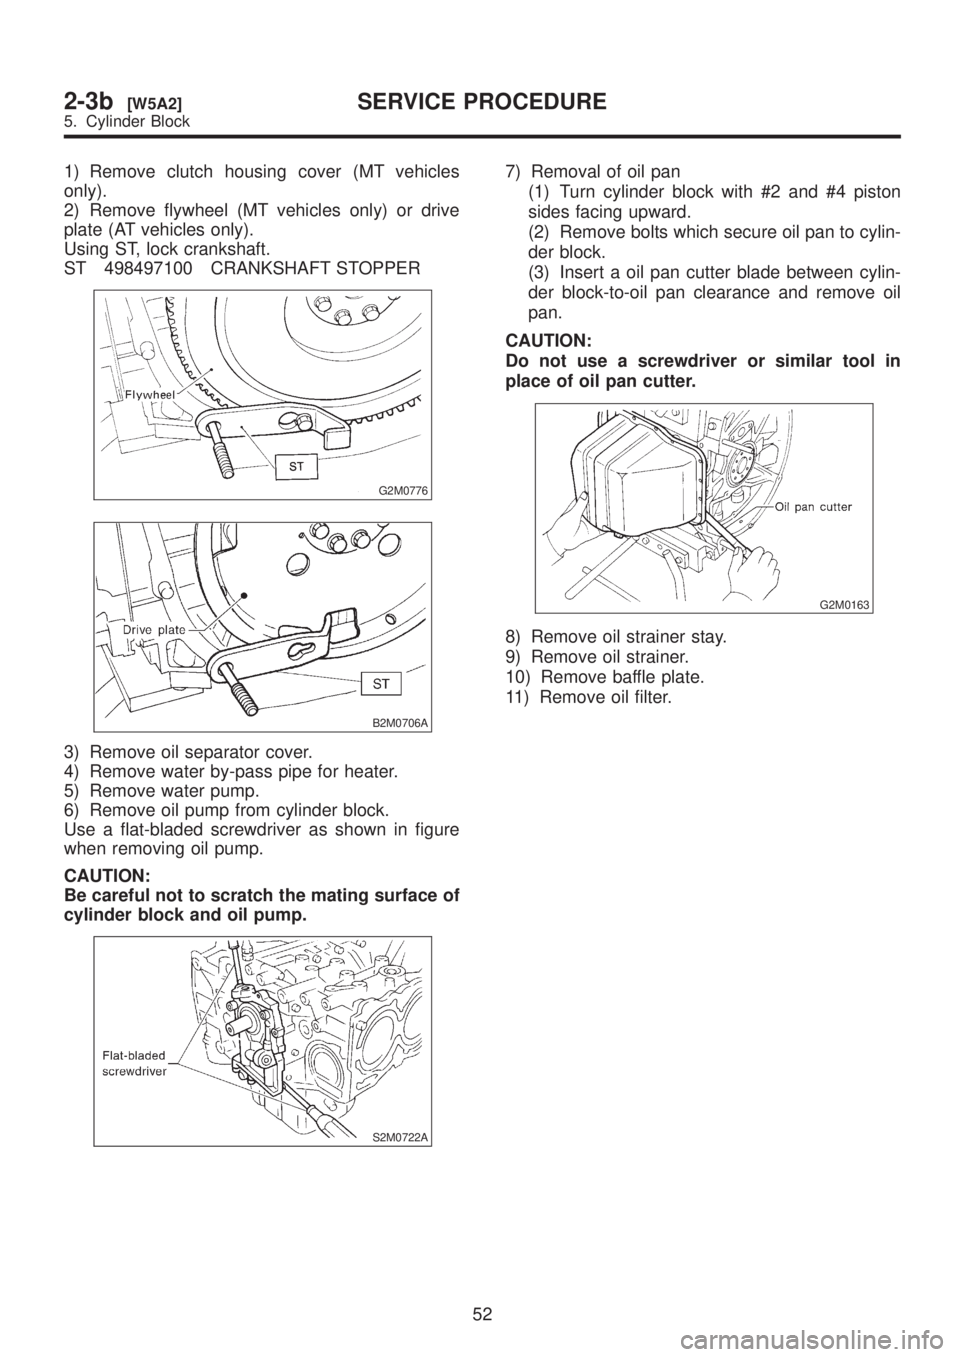 SUBARU LEGACY 1999  Service Repair Manual 1) Remove clutch housing cover (MT vehicles
only).
2) Remove flywheel (MT vehicles only) or drive
plate (AT vehicles only).
Using ST, lock crankshaft.
ST 498497100 CRANKSHAFT STOPPER
G2M0776
B2M0706A
